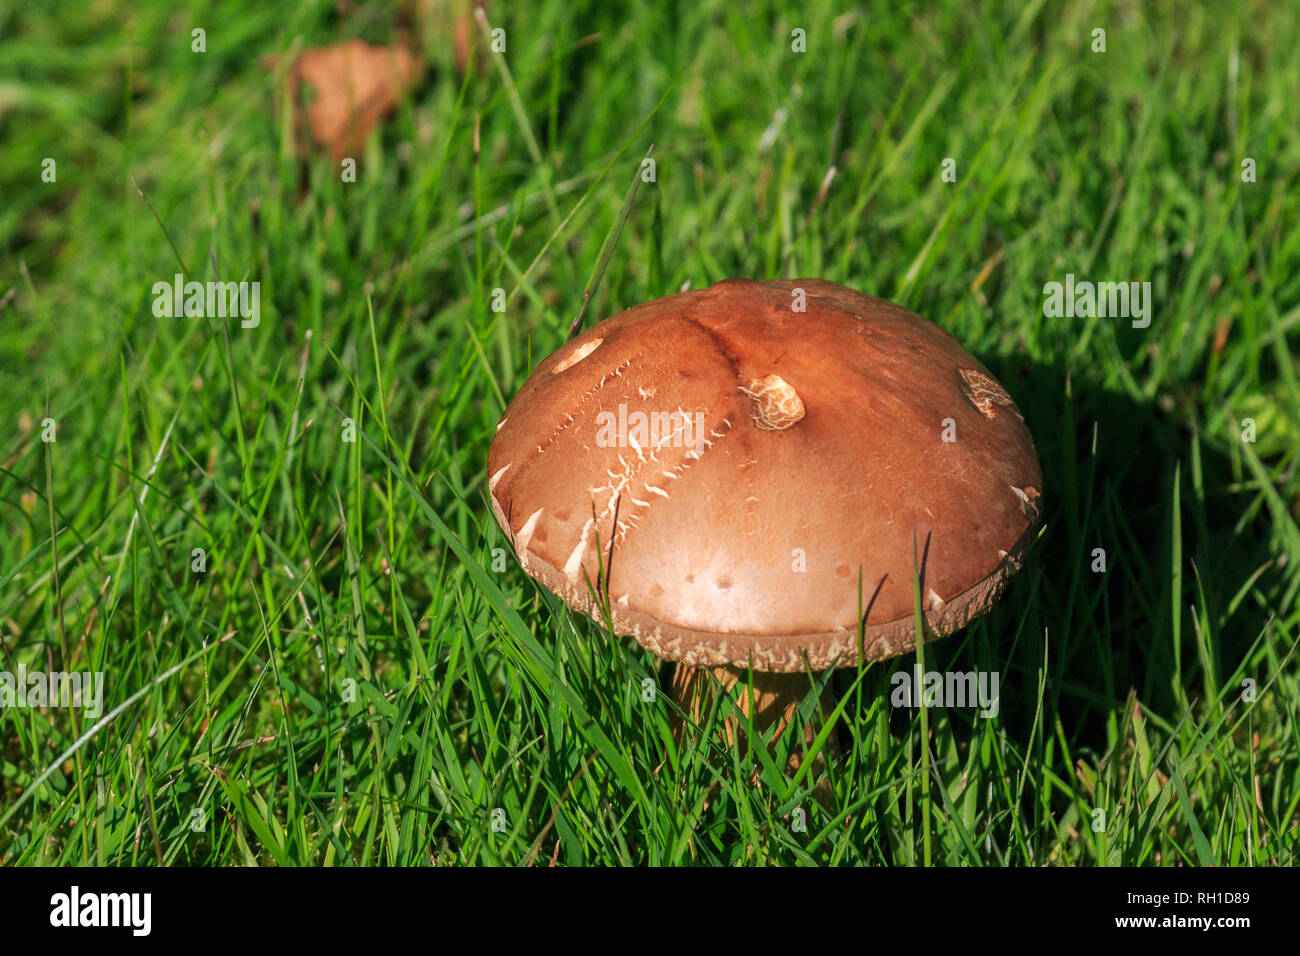 Sunlit Boletus erythropus mushroom growing amongst grass Stock Photo